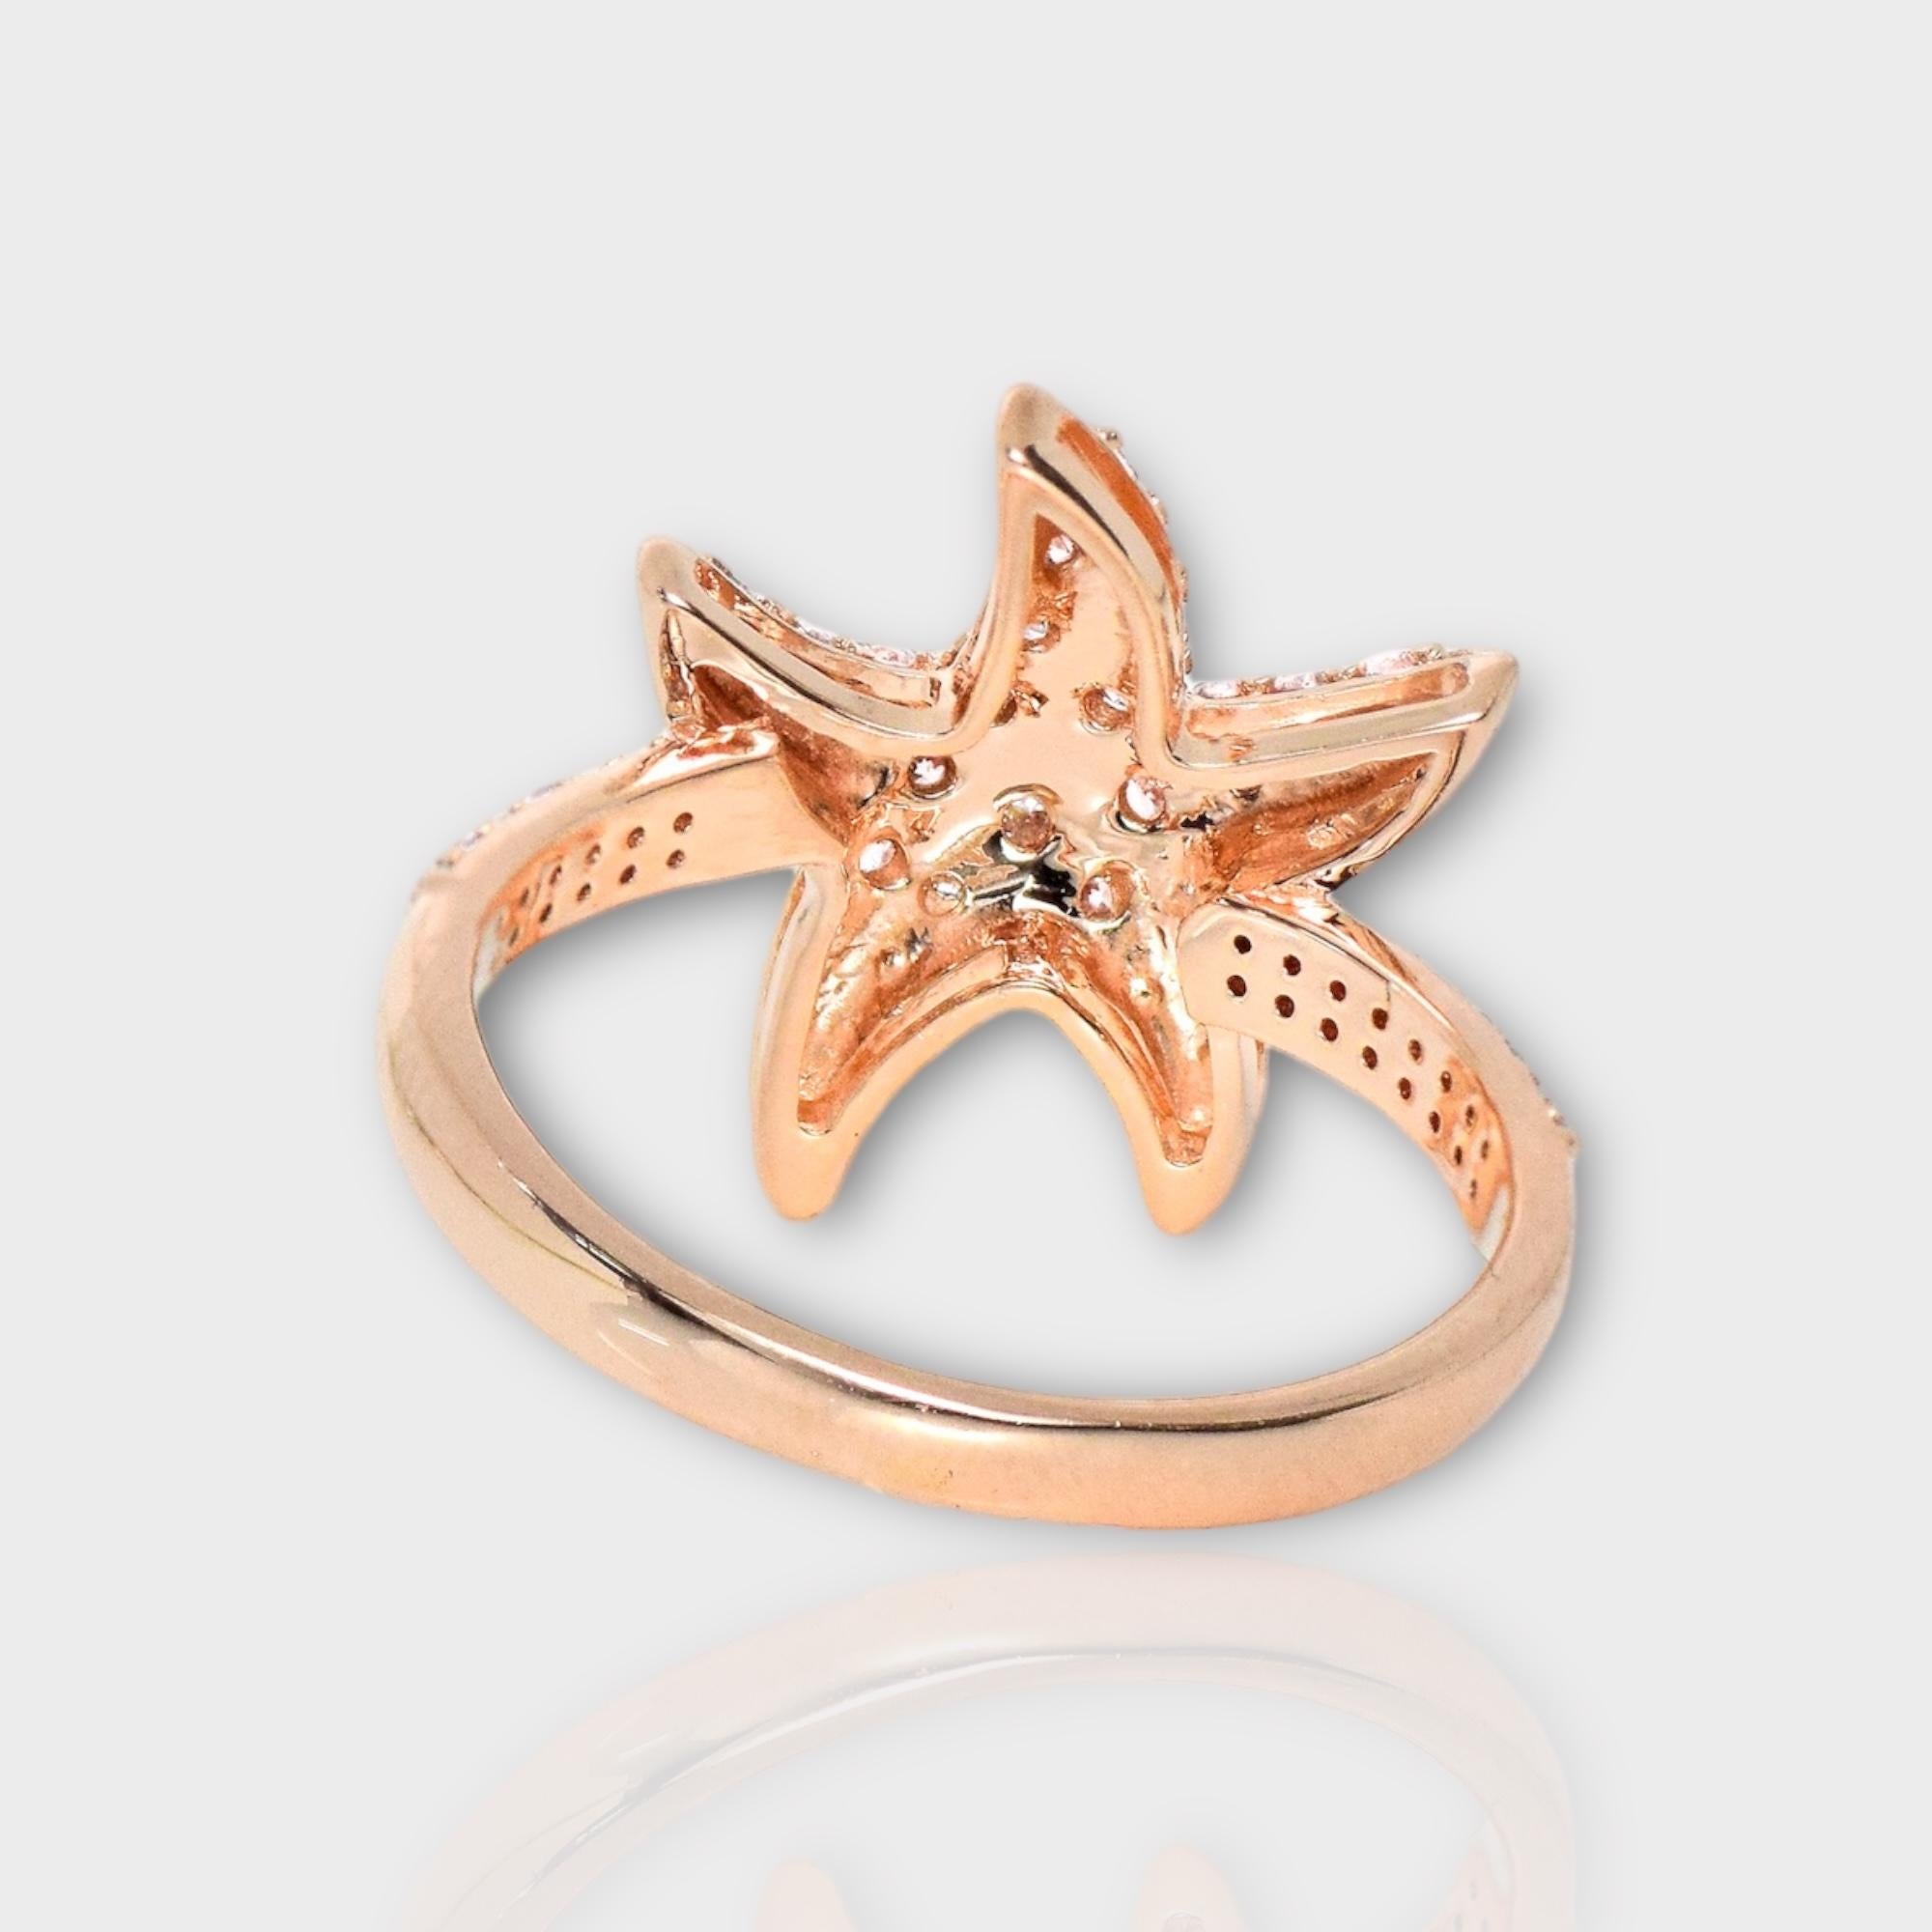 IGI 14K 0.60 ct Natural Pink Diamonds Sea Star Design Antique Art Deco Ring For Sale 2